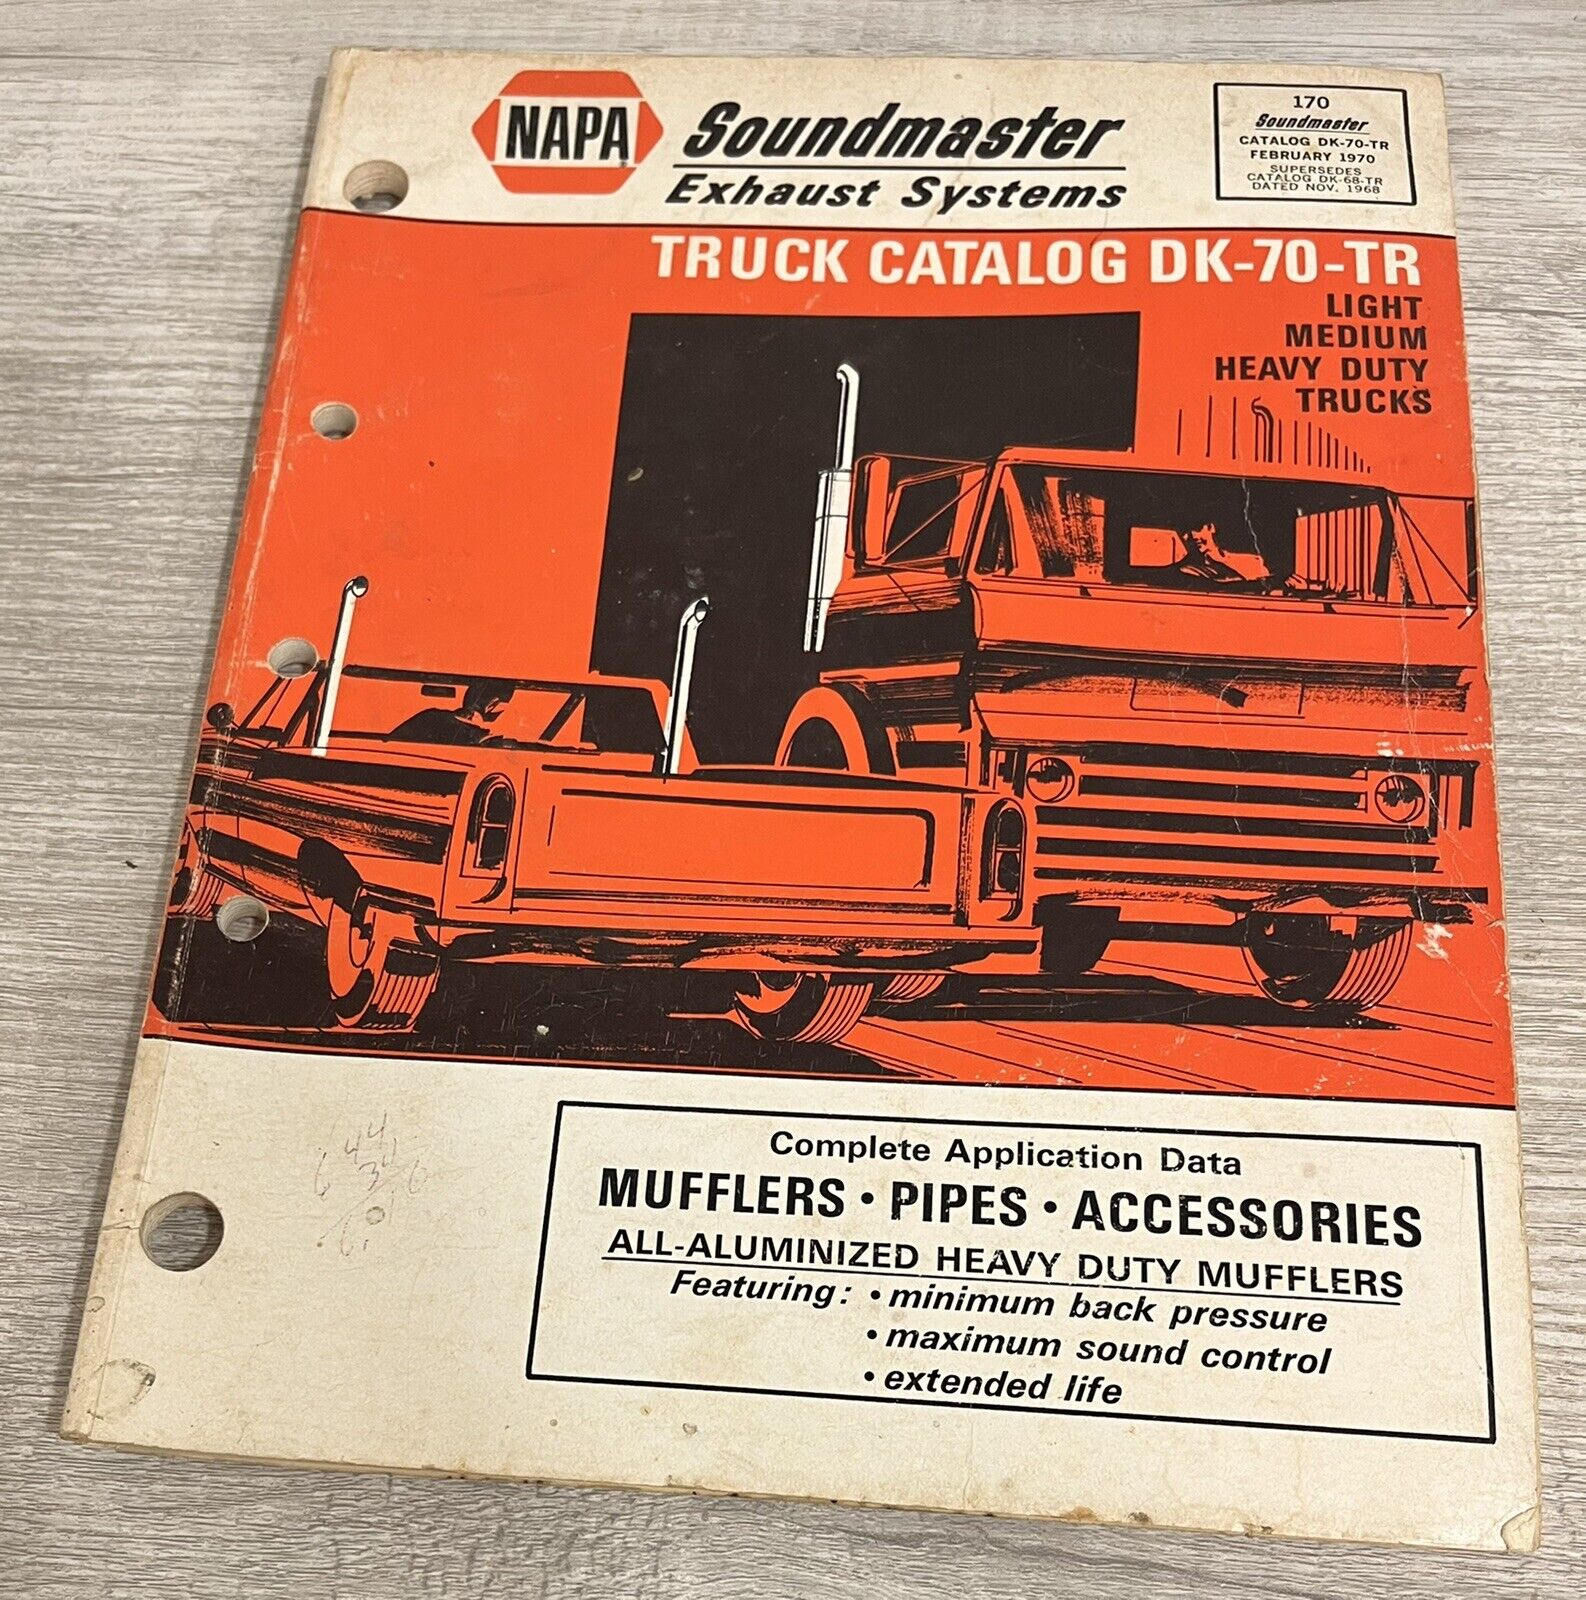 1970 NAPA Soundmaster Truck Muffler Exhaust Pipes Accessories Catalog DK-70-TR